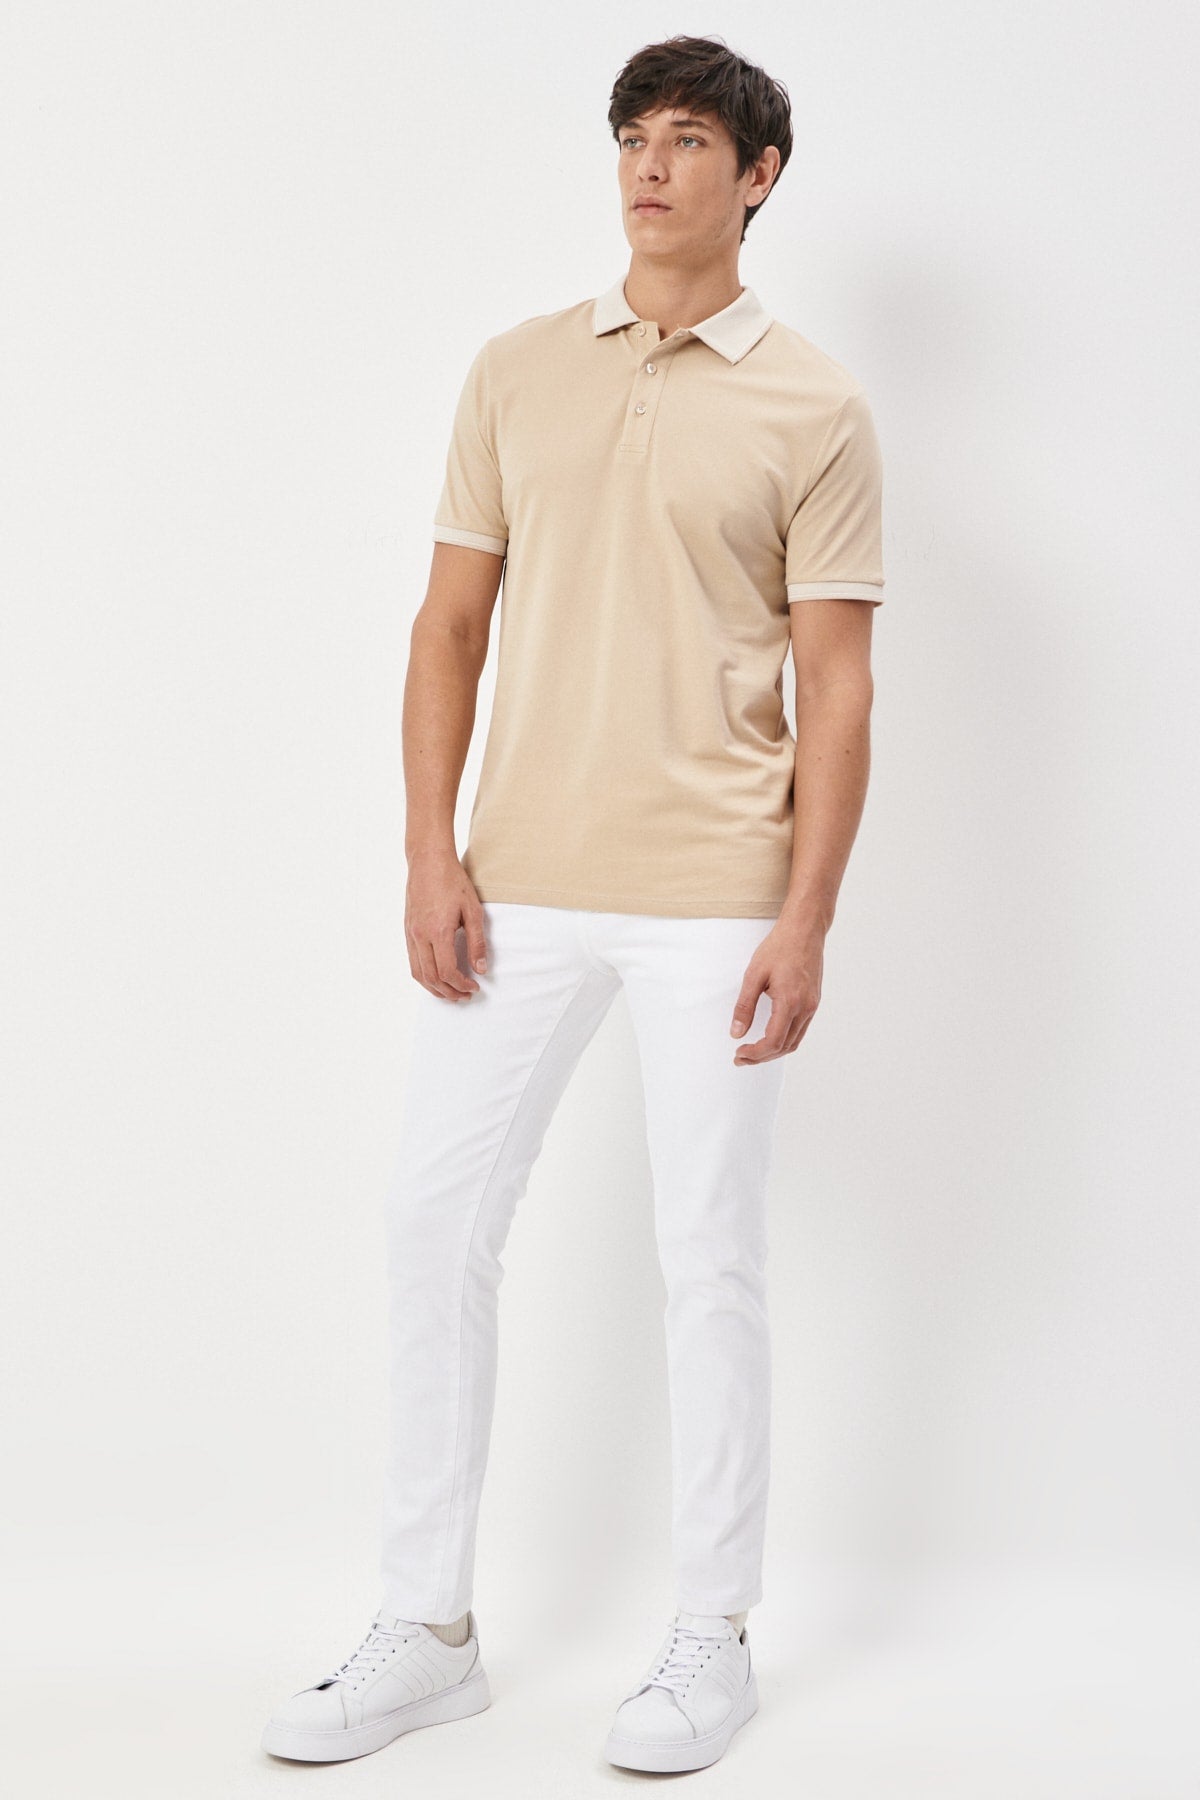 Men's Non-Shrink Cotton Fabric Slim Fit Slim Fit Light-Beige Anti-Roll Polo Neck T-Shirt